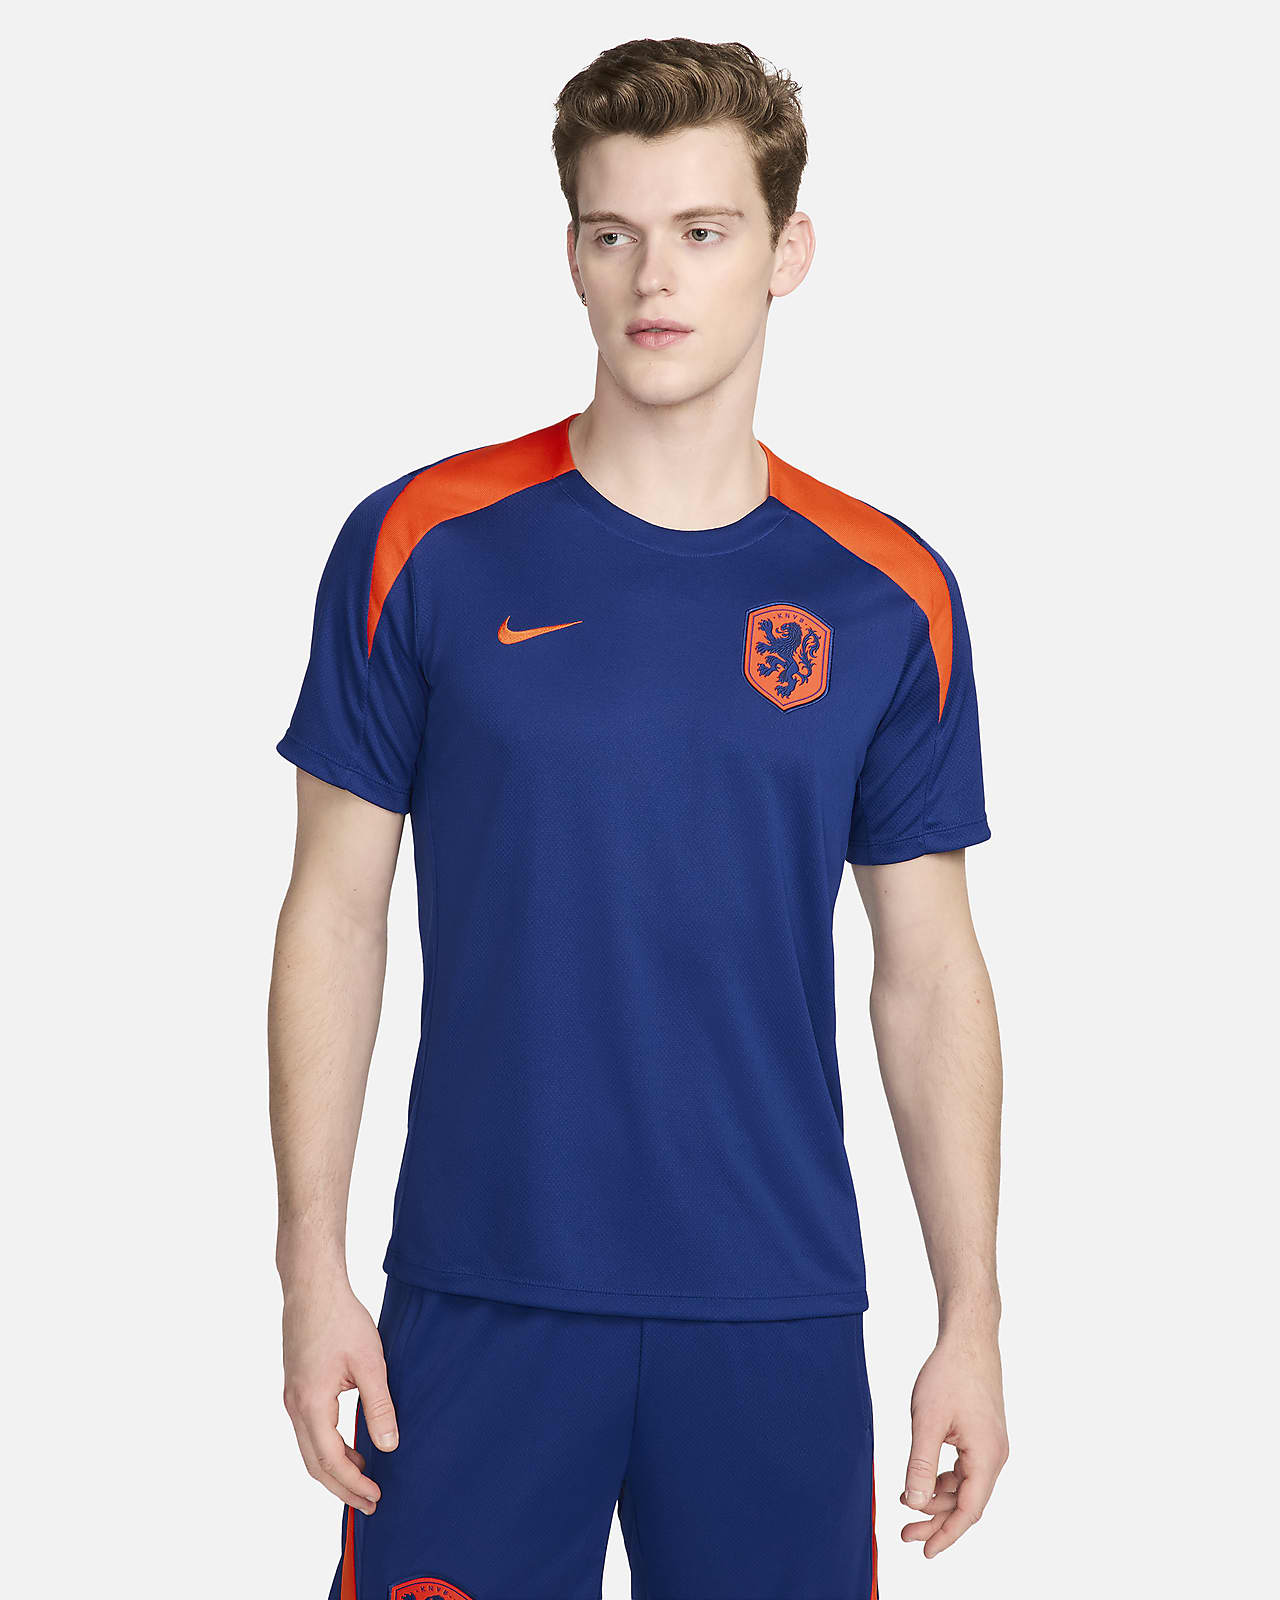 Hollanda Strike Nike Dri-FIT Kısa Kollu Örgü Erkek Futbol Üstü